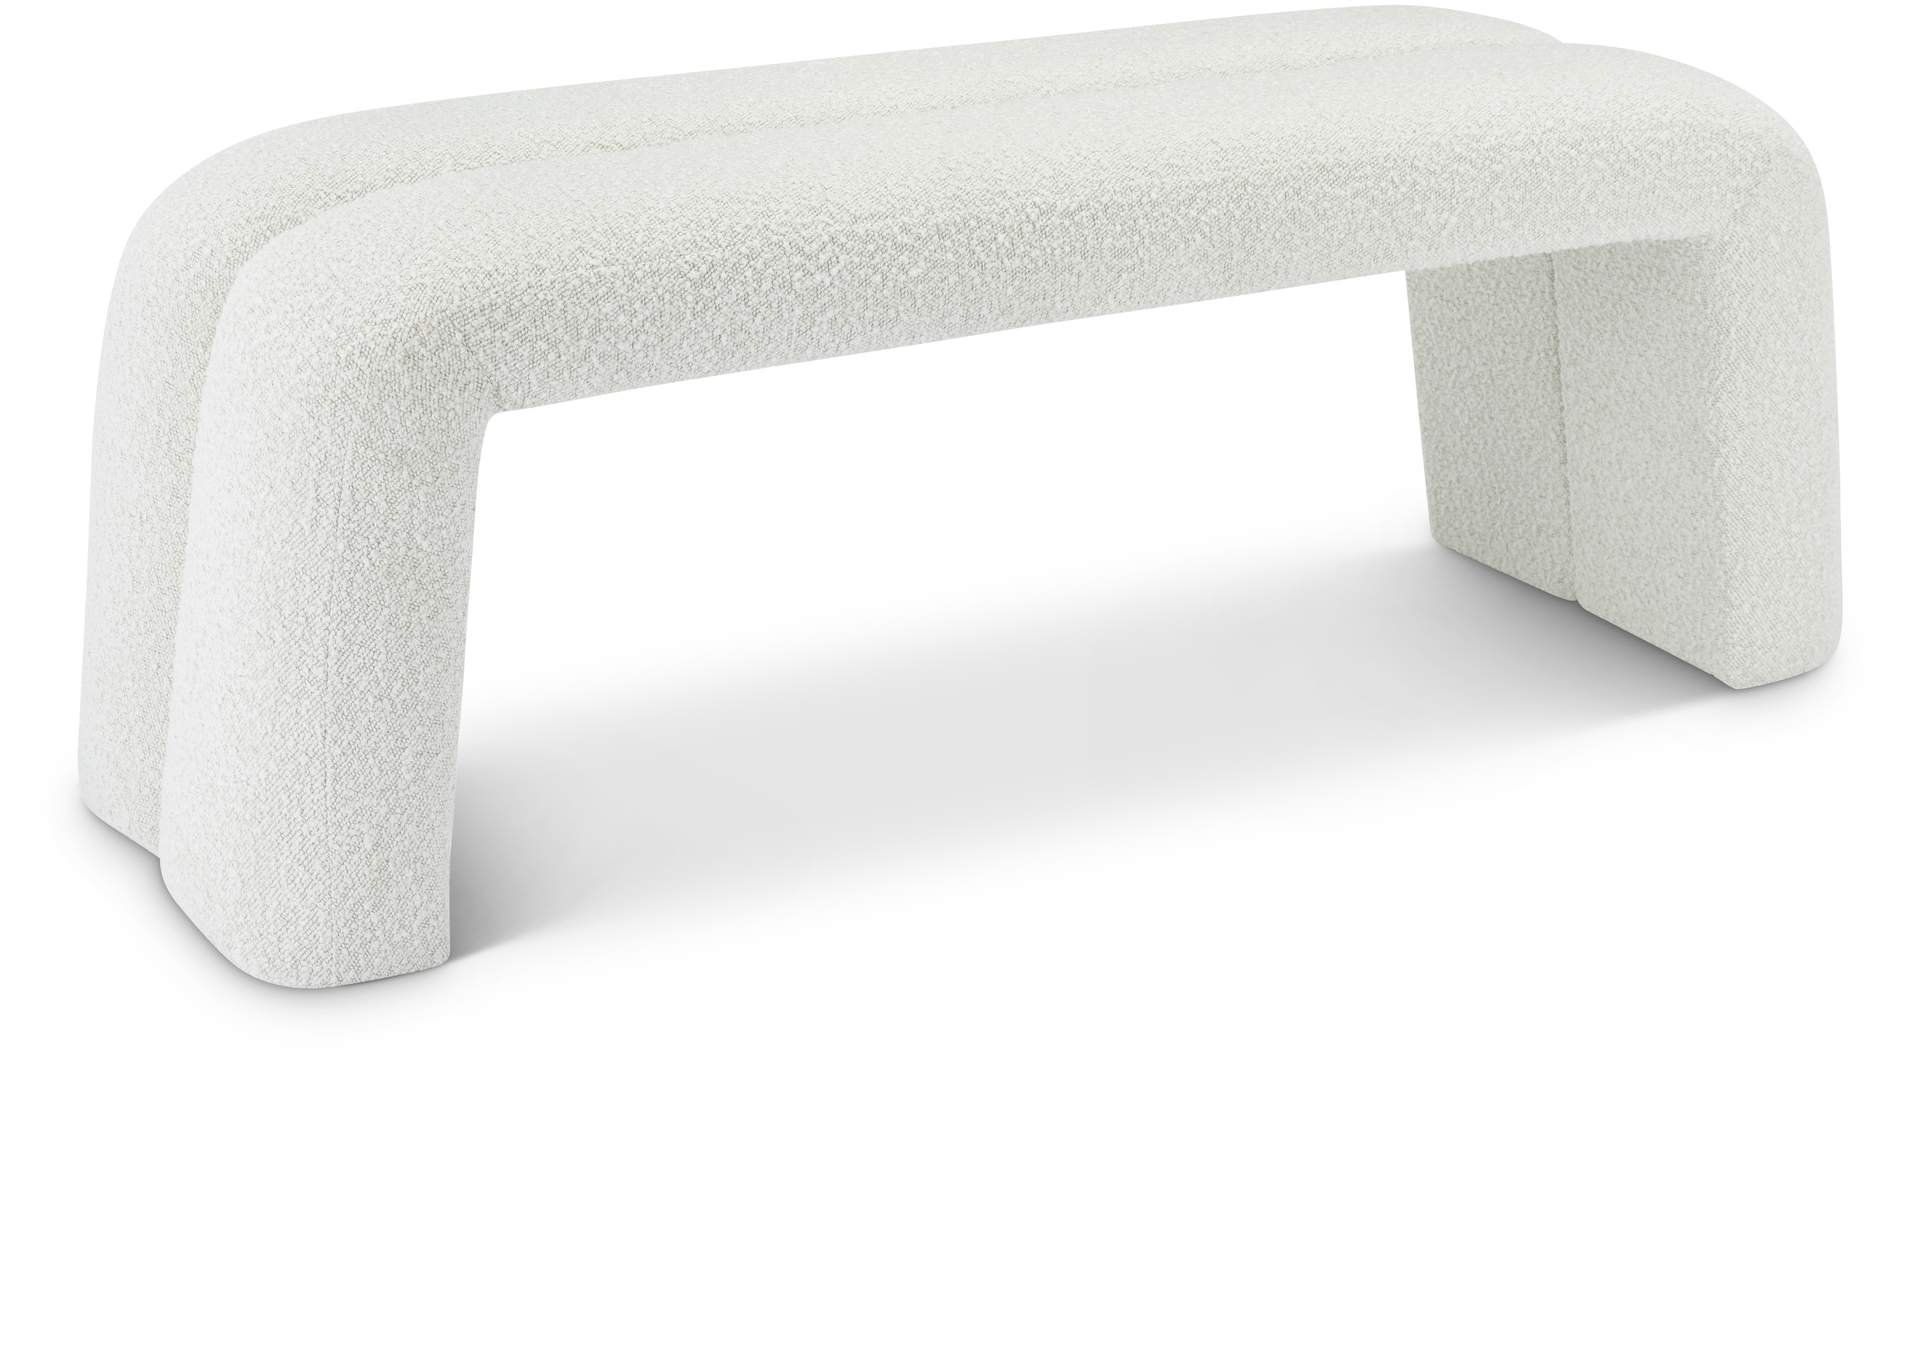 Arc Cream Boucle Fabric Bench,Meridian Furniture